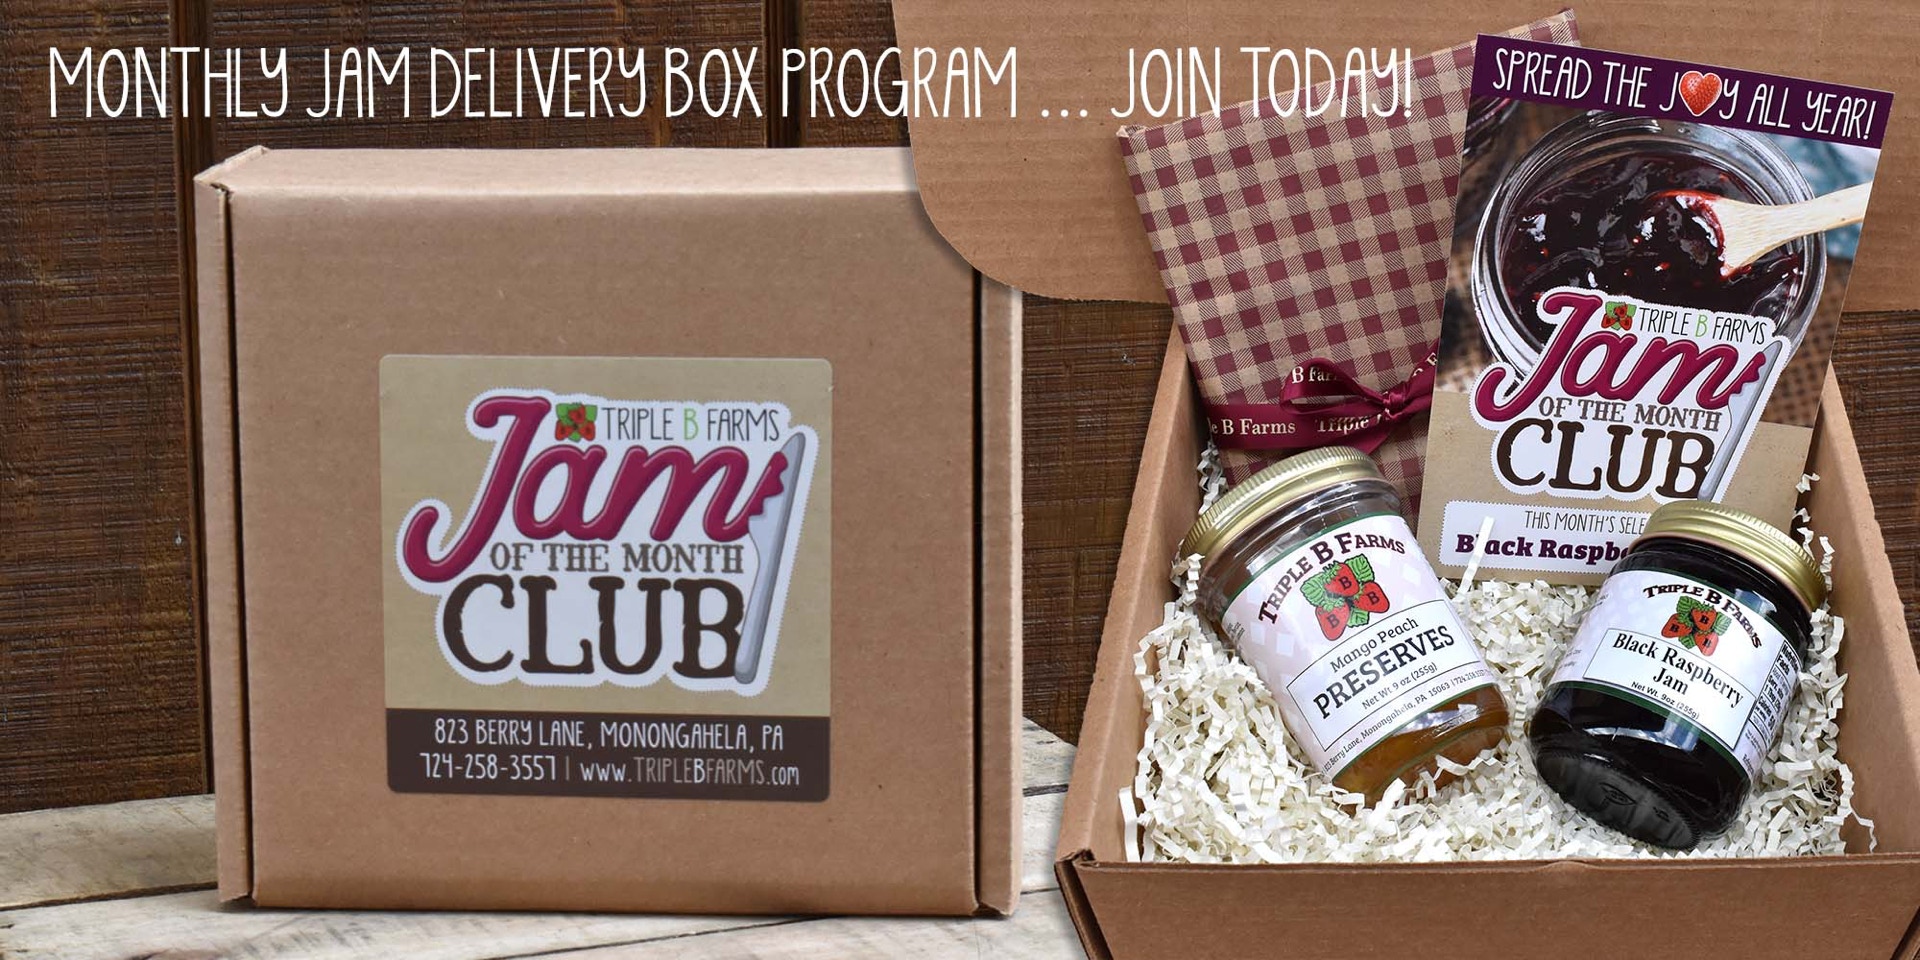 Triple B Farms Jam of the Month Club. Jam & Jelly Subscription program.